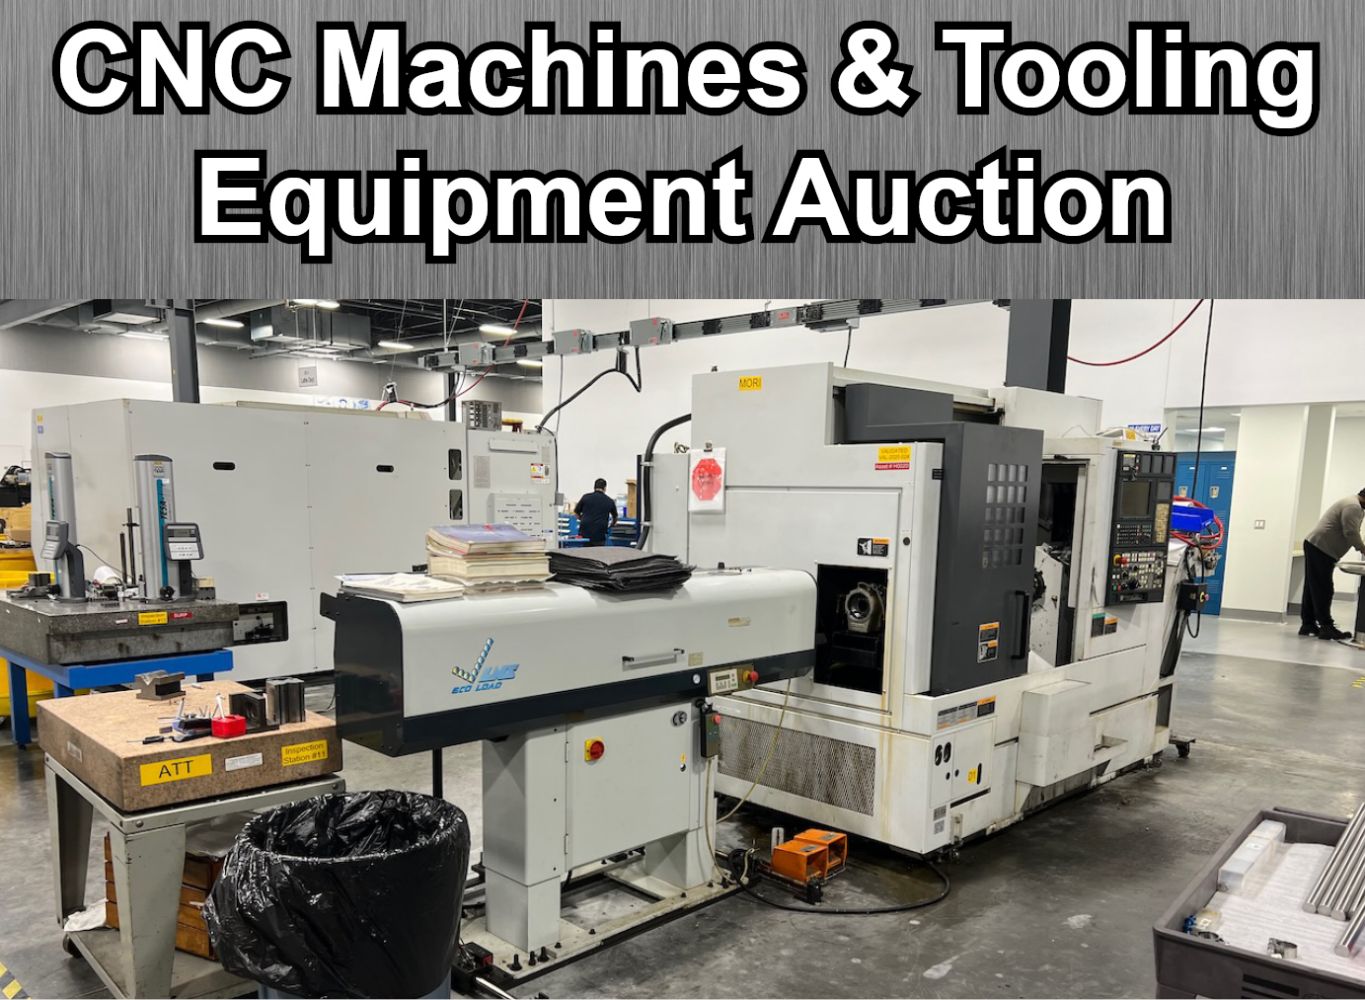 CNC Machines & Tooling Equipment Auction